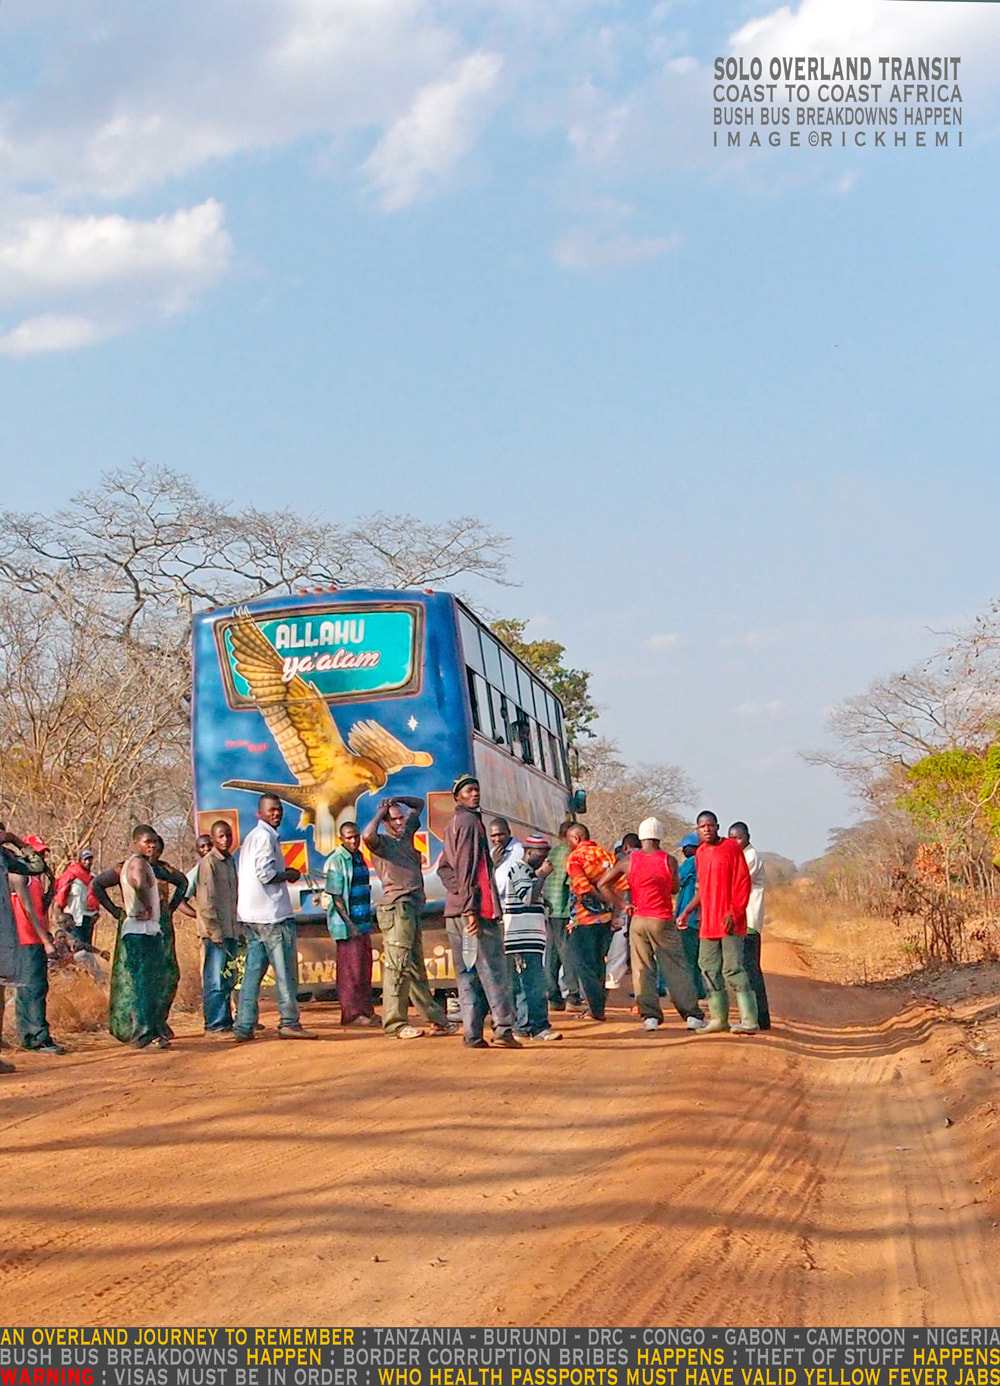 solo overland travel and transit Africa, bush bus coast to coast Africa, image by Rick Hemi